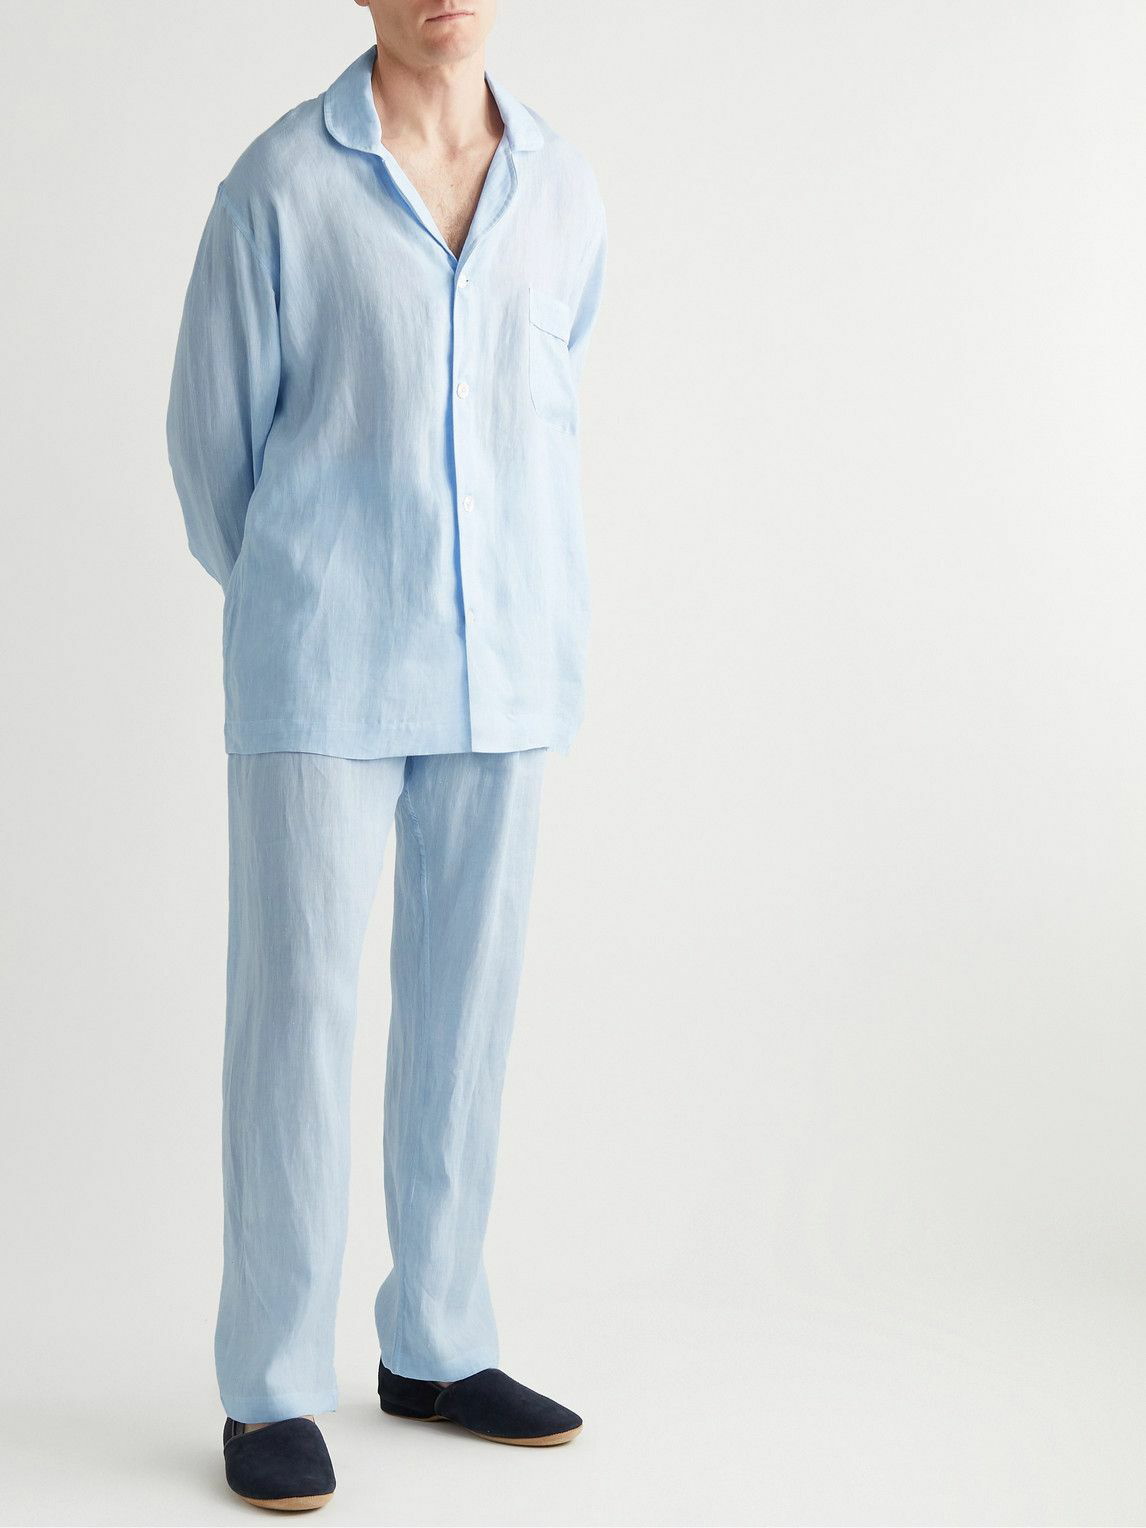 Emma Willis - Slub Linen Pyjama Set - Blue Emma Willis